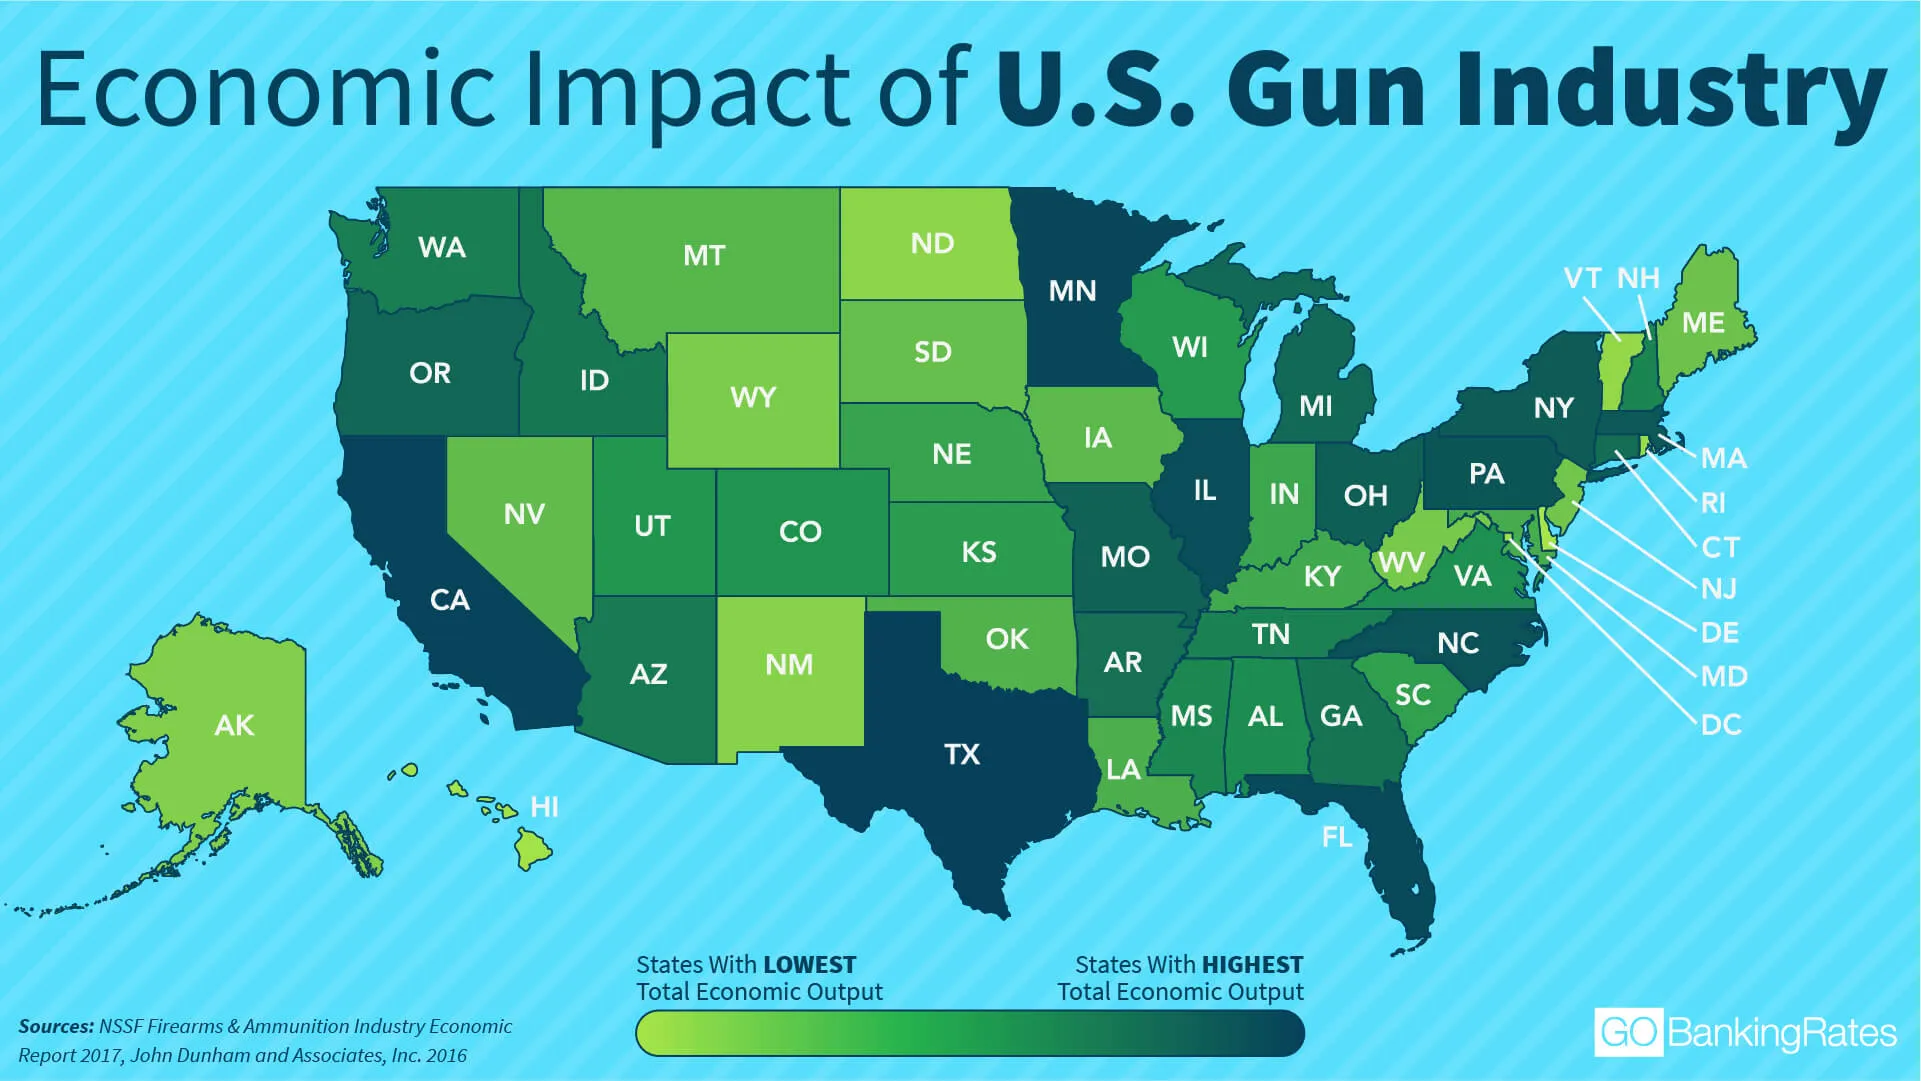 Economic Impact of the U.S. Gun Industry